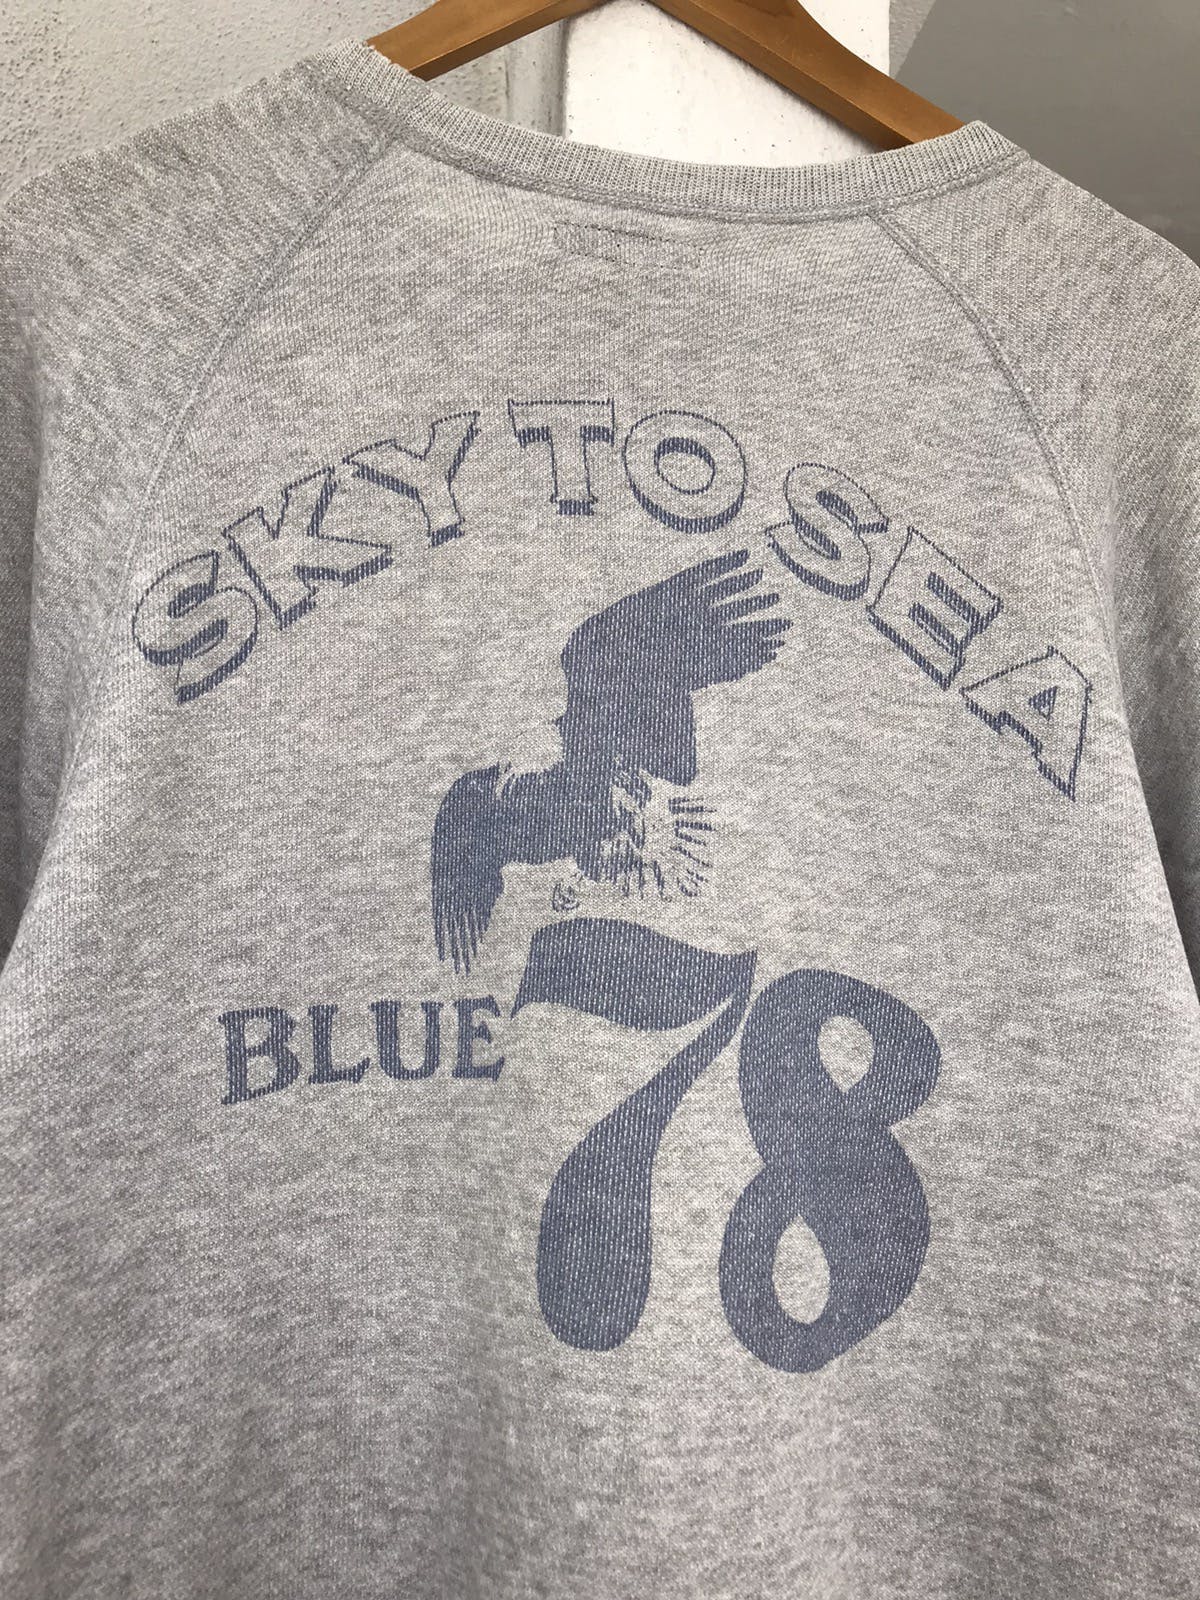 Blue Blue Japan Sleeve Cut Sweatshirt - 8